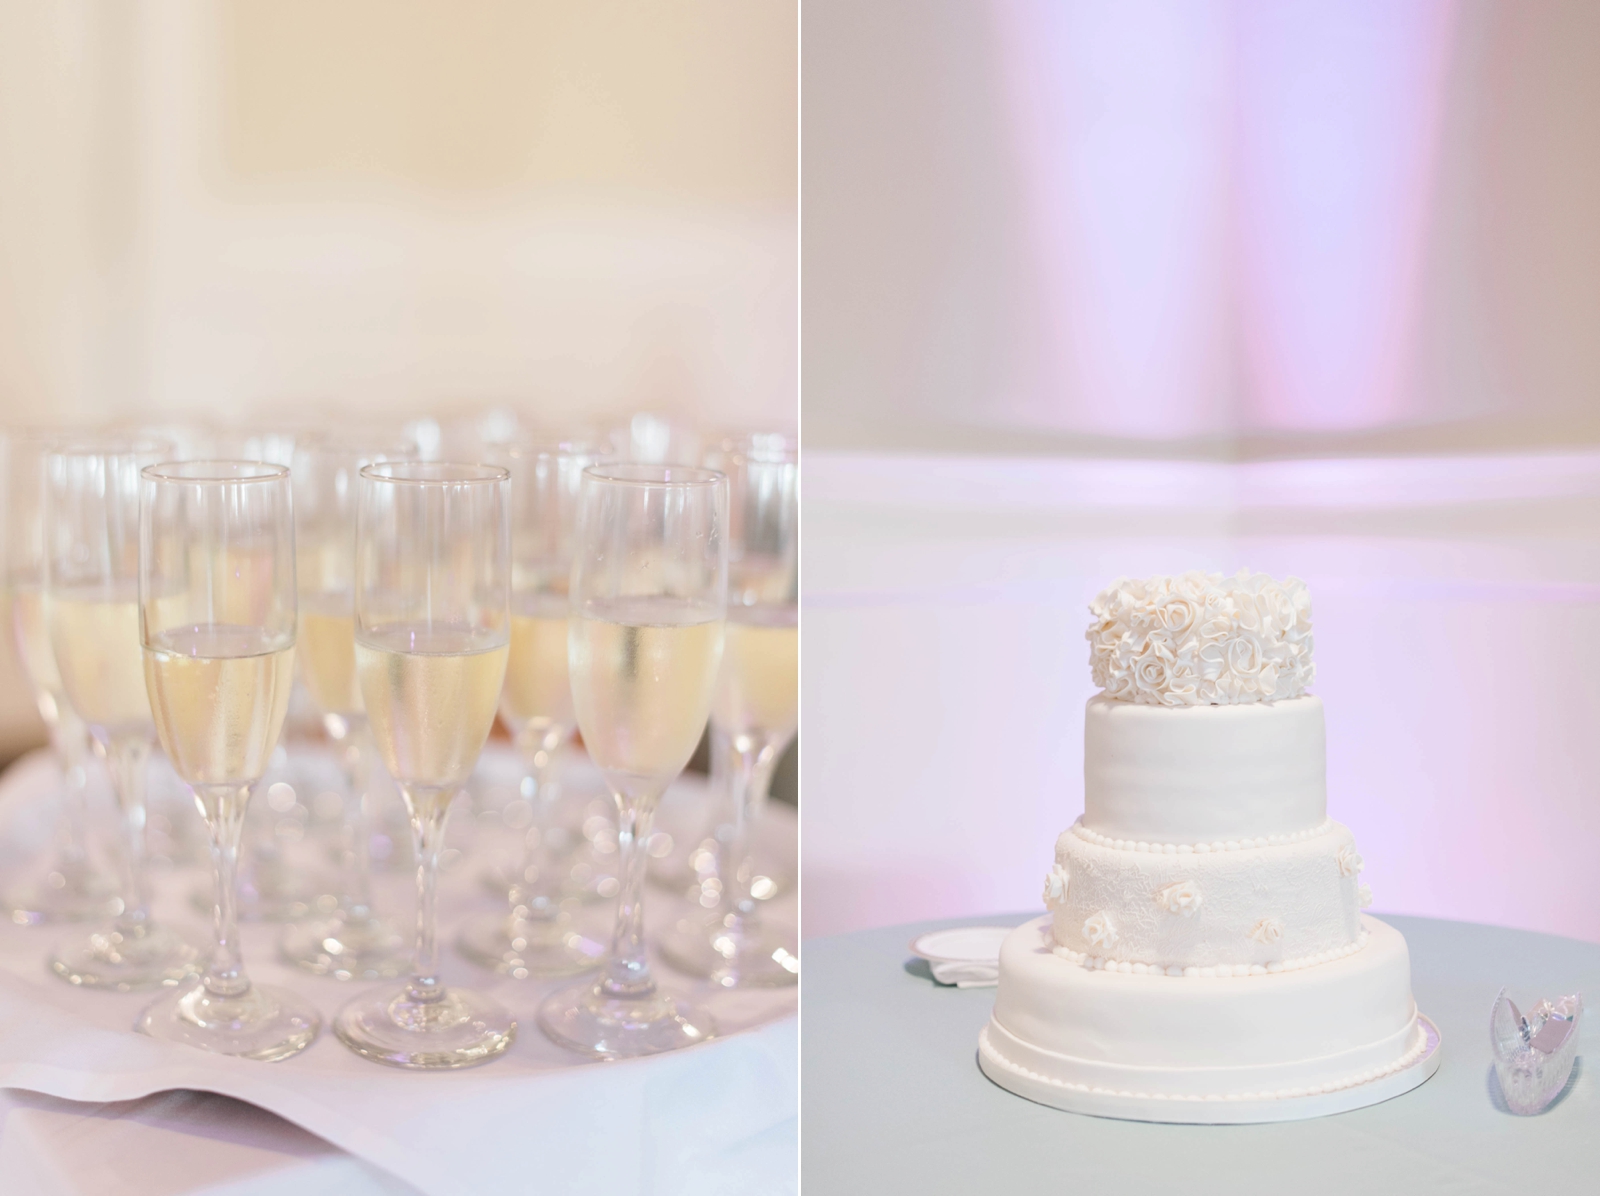 Chatauqua Lake Athenaeum Hotel Wedding reception room decor details champagne cake